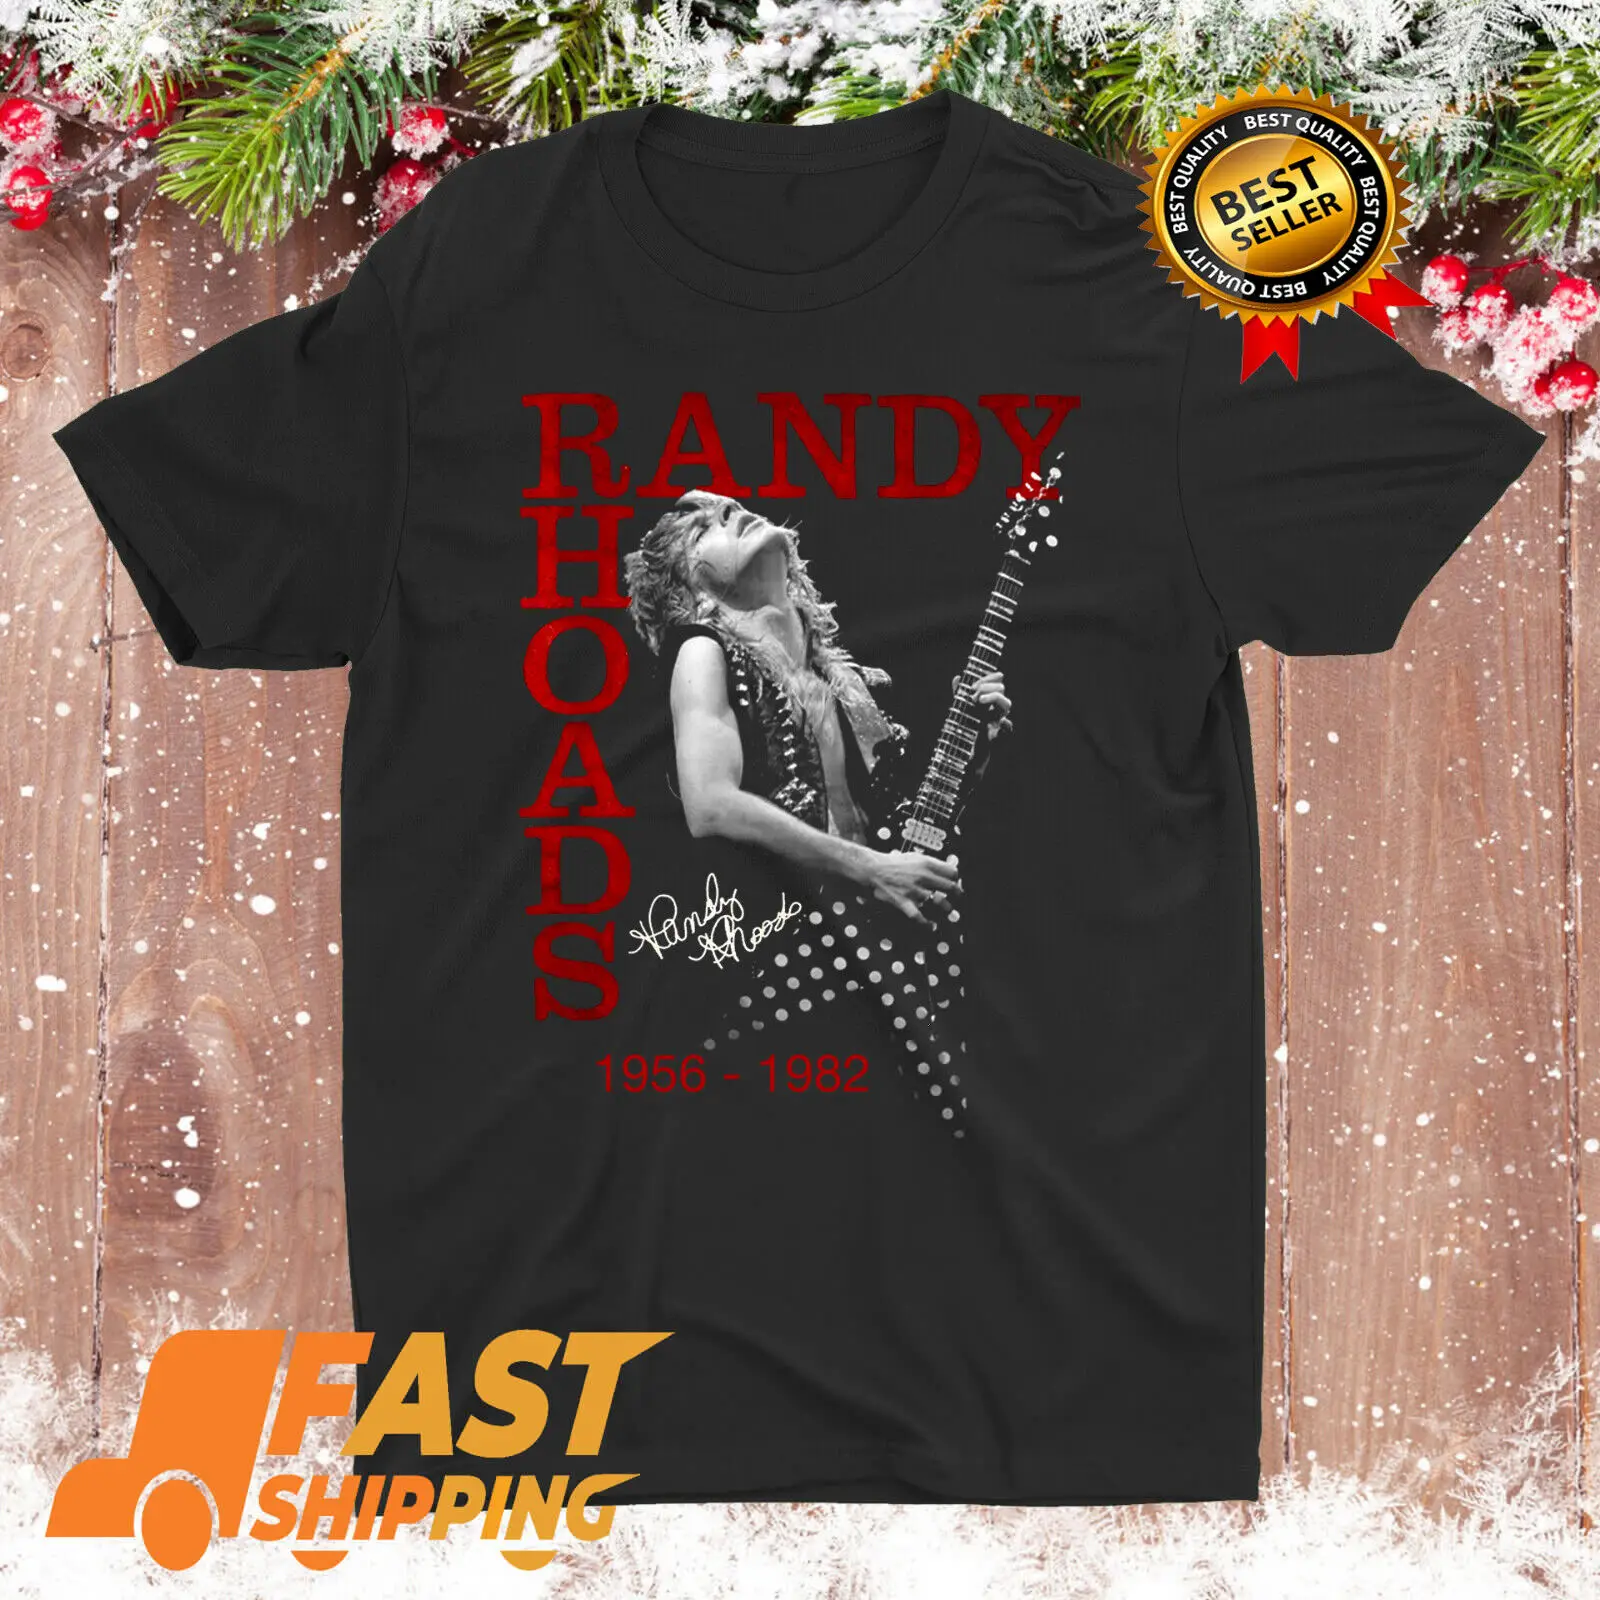 Vintage RANDY RHOADS Guitarist Signed 1956-1982 Black Unisex S-4XL Shirt DD263 long or short sleeves